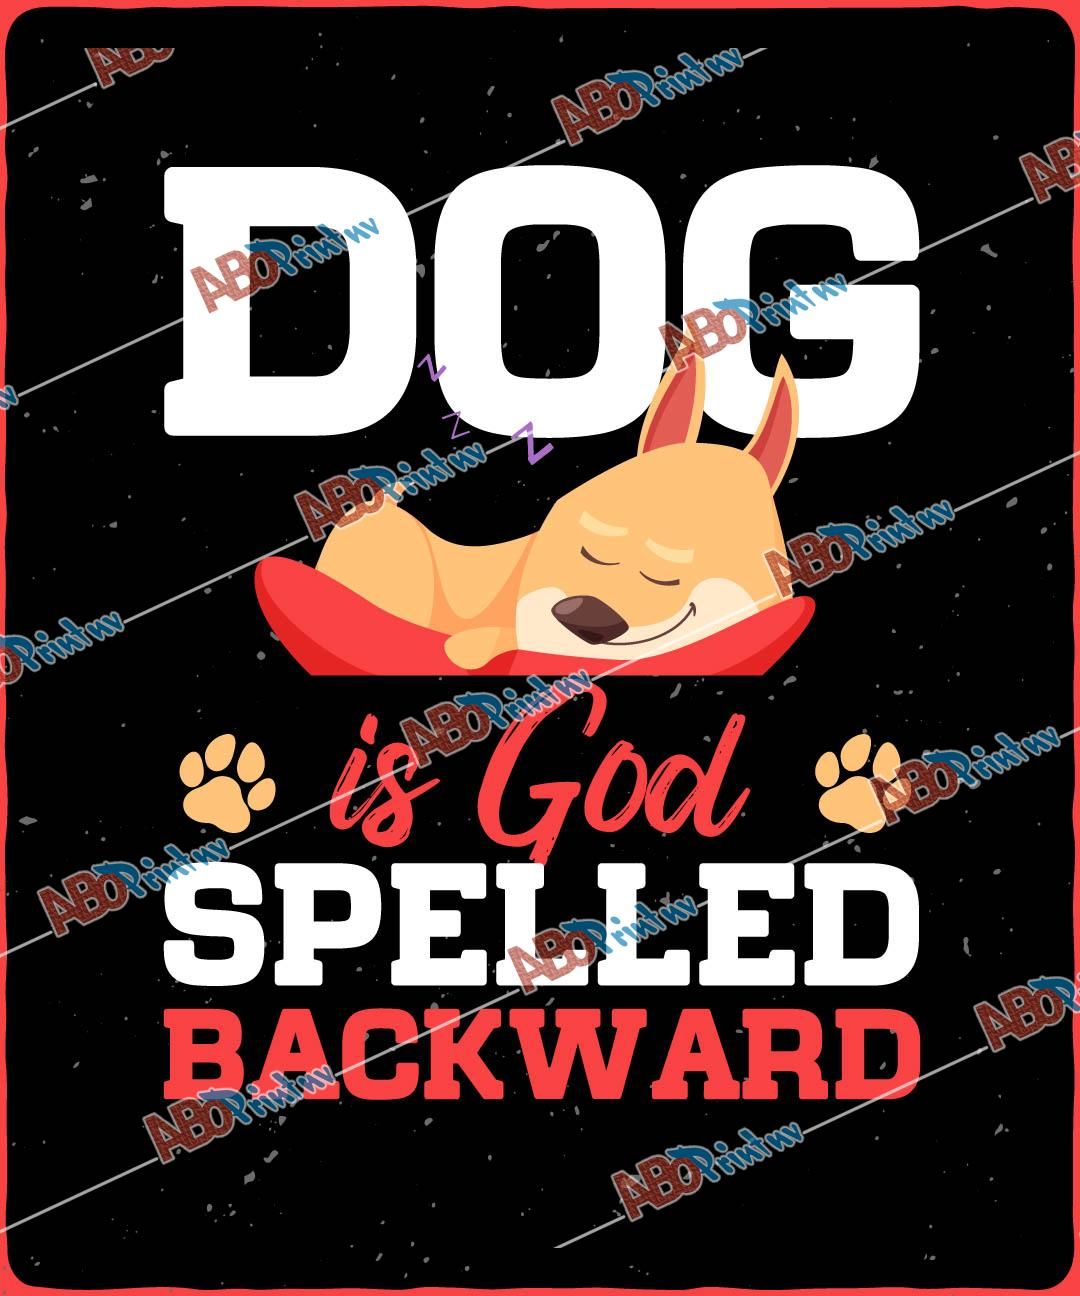 Dog is God spelled backwardJPG (1).jpg